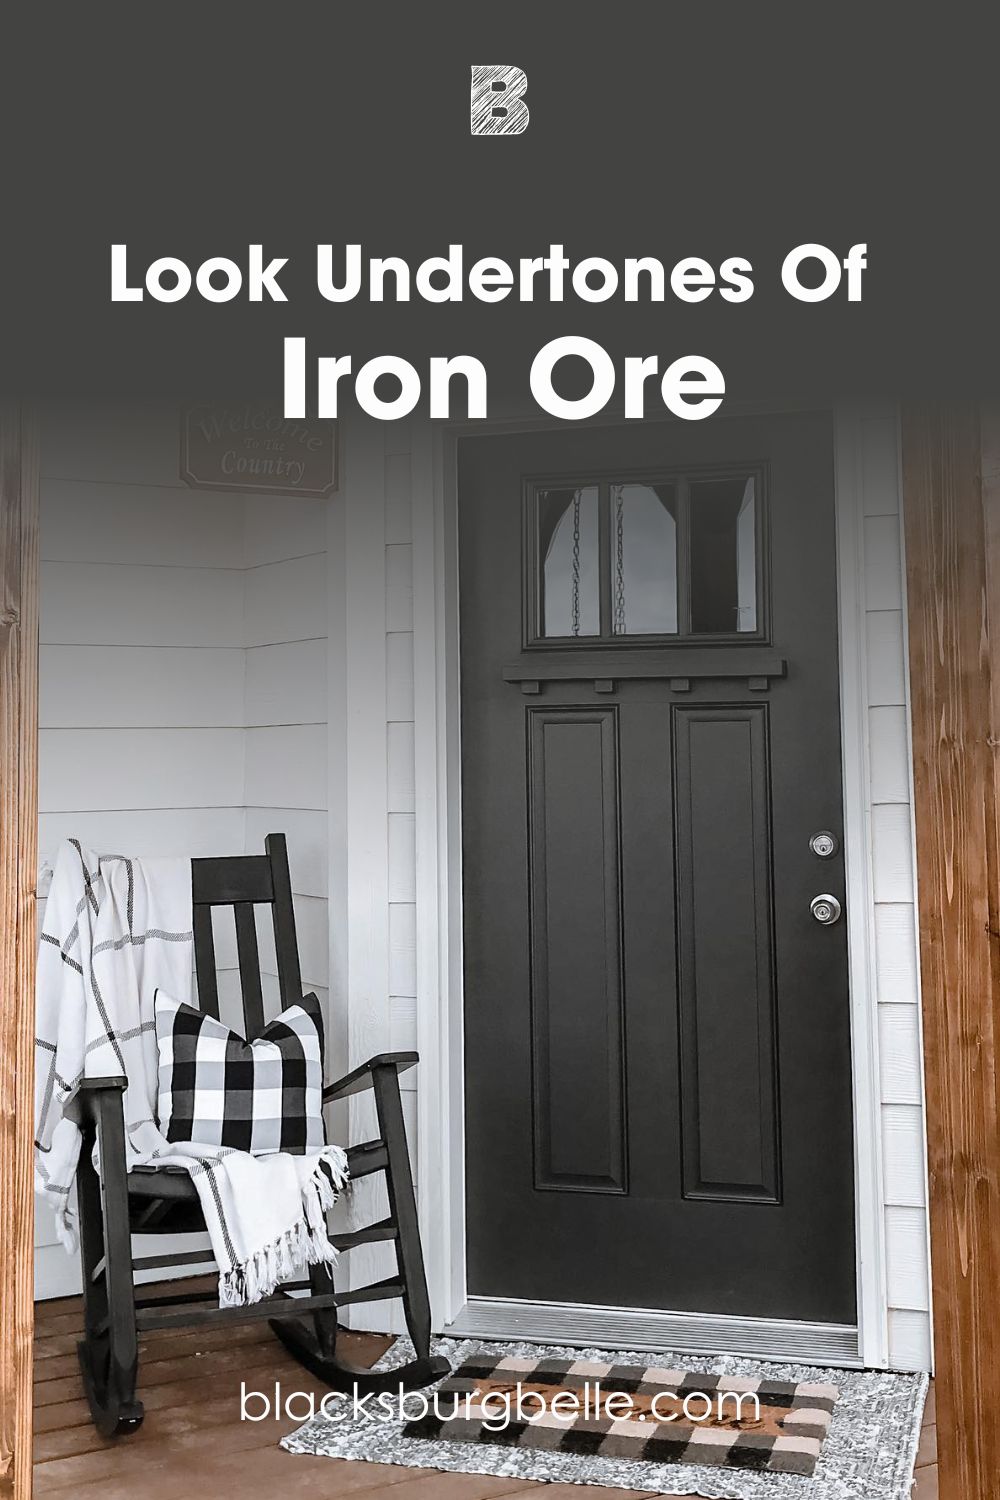 A Closer Look at Iron Ore’s Undertones